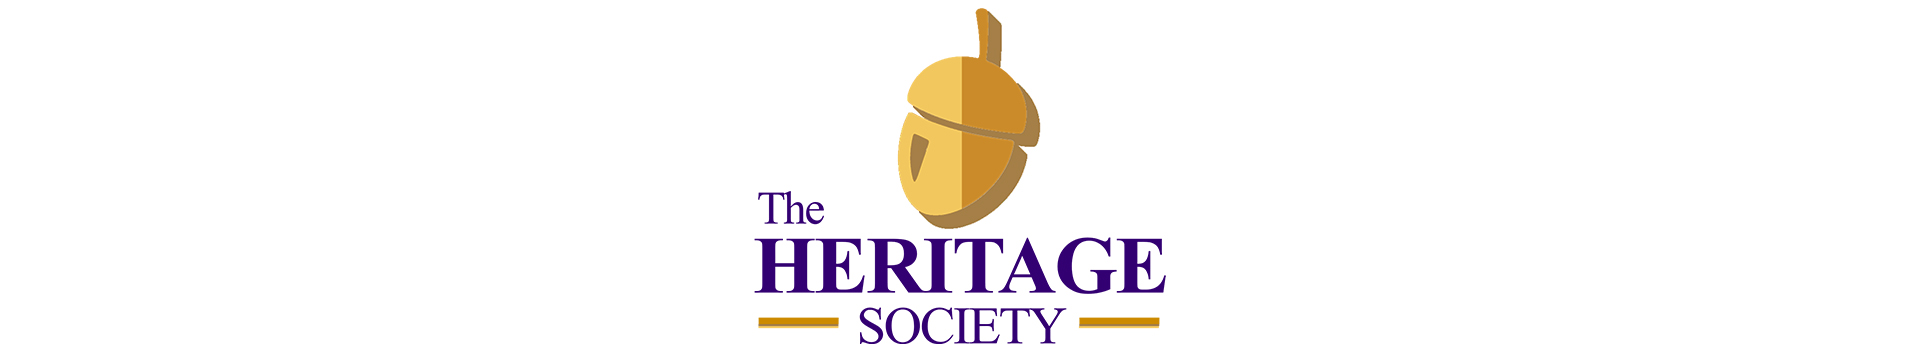 Heritage Society Logo